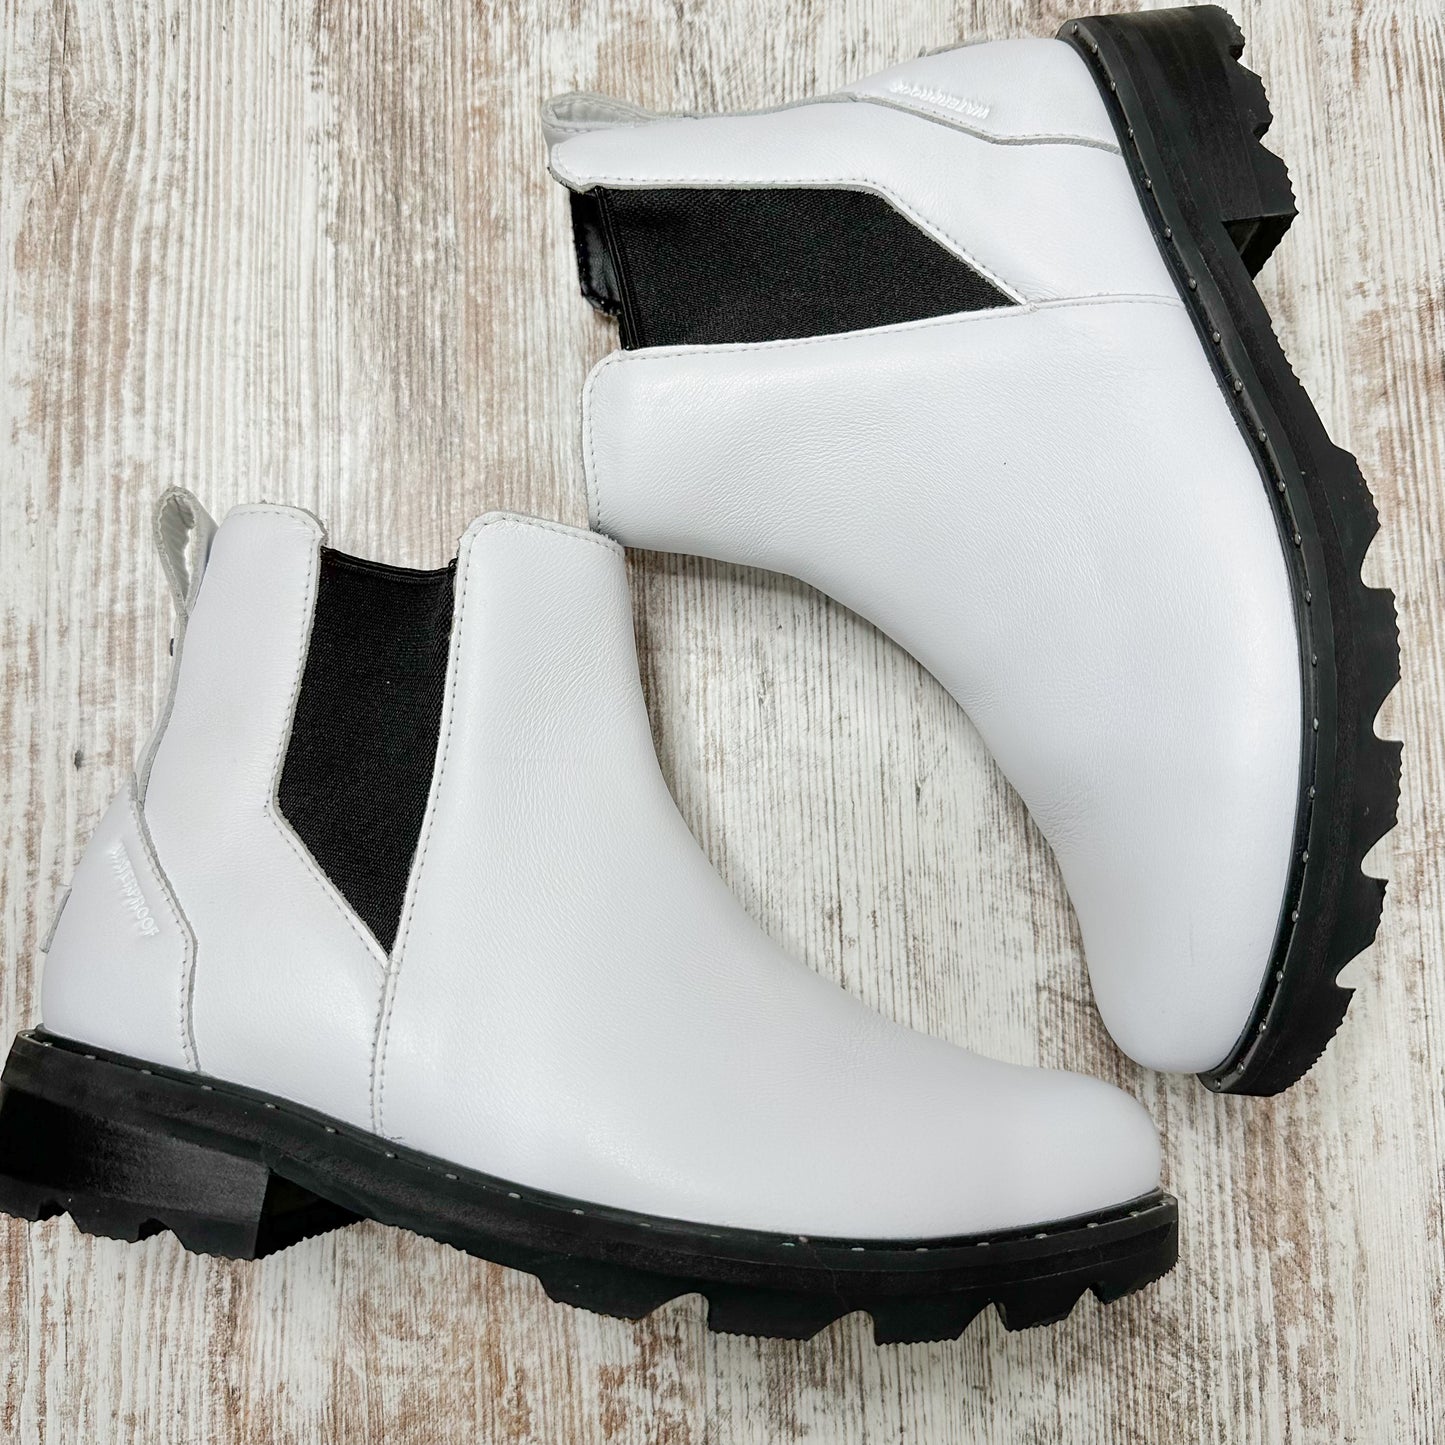 Sorel "Lennox" Waterproof White Leather Chelsea Boots Size 9.5